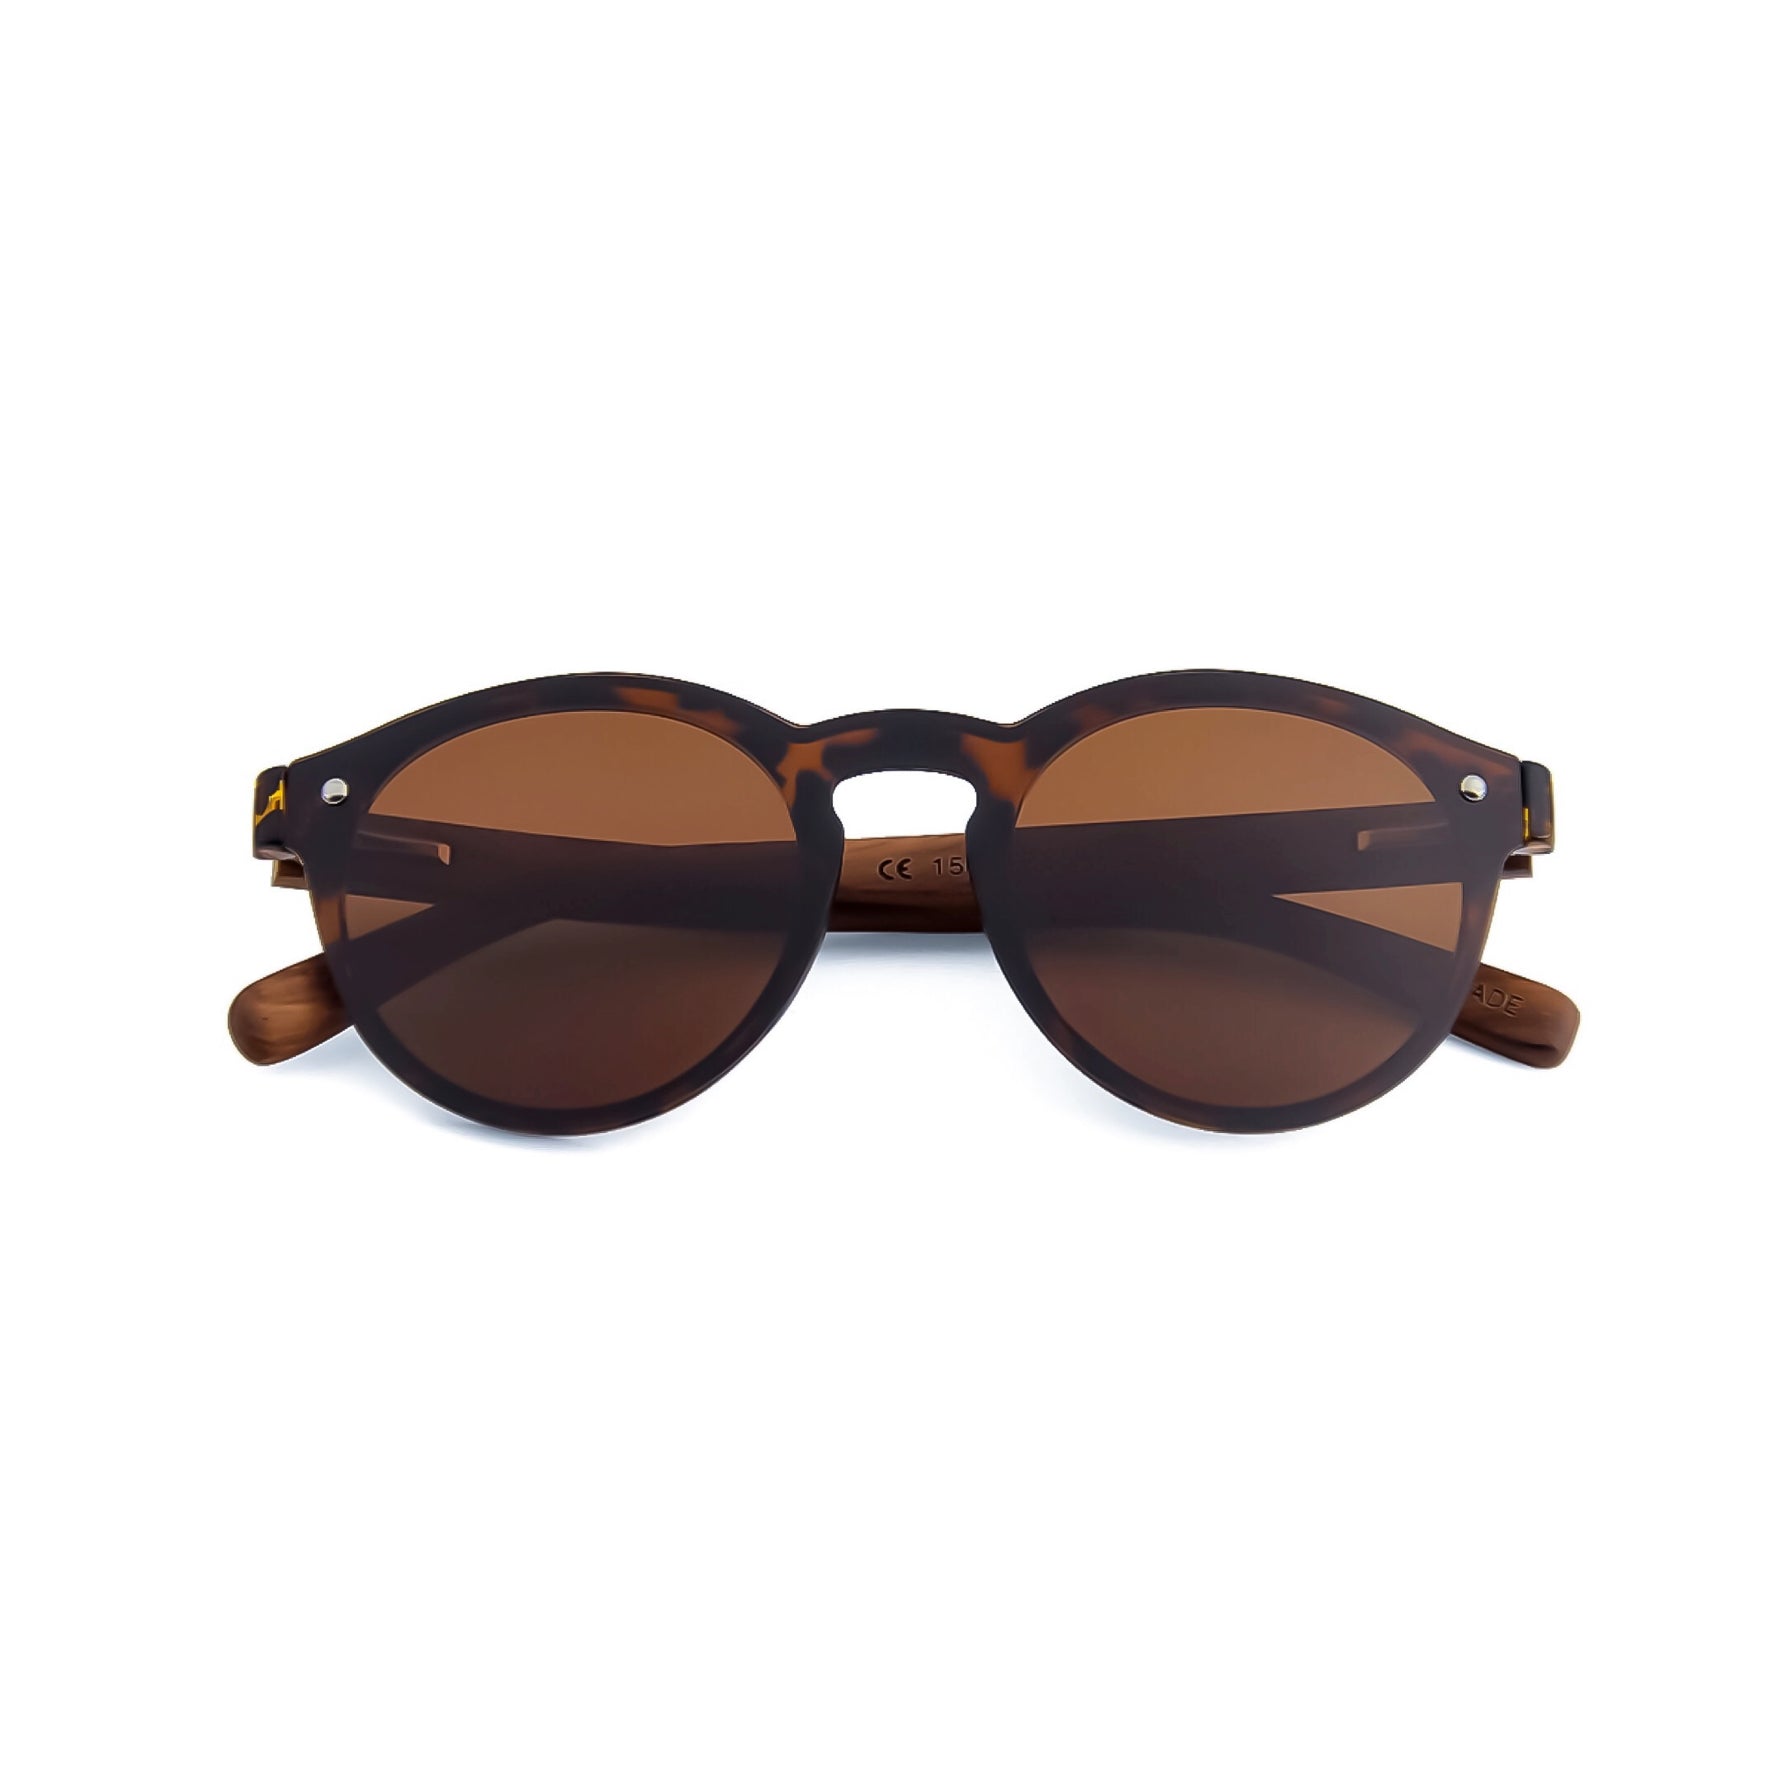 Round Tortoise Shell Beatnick Polarized Bamboo Wooden Sunglasses by Derivative